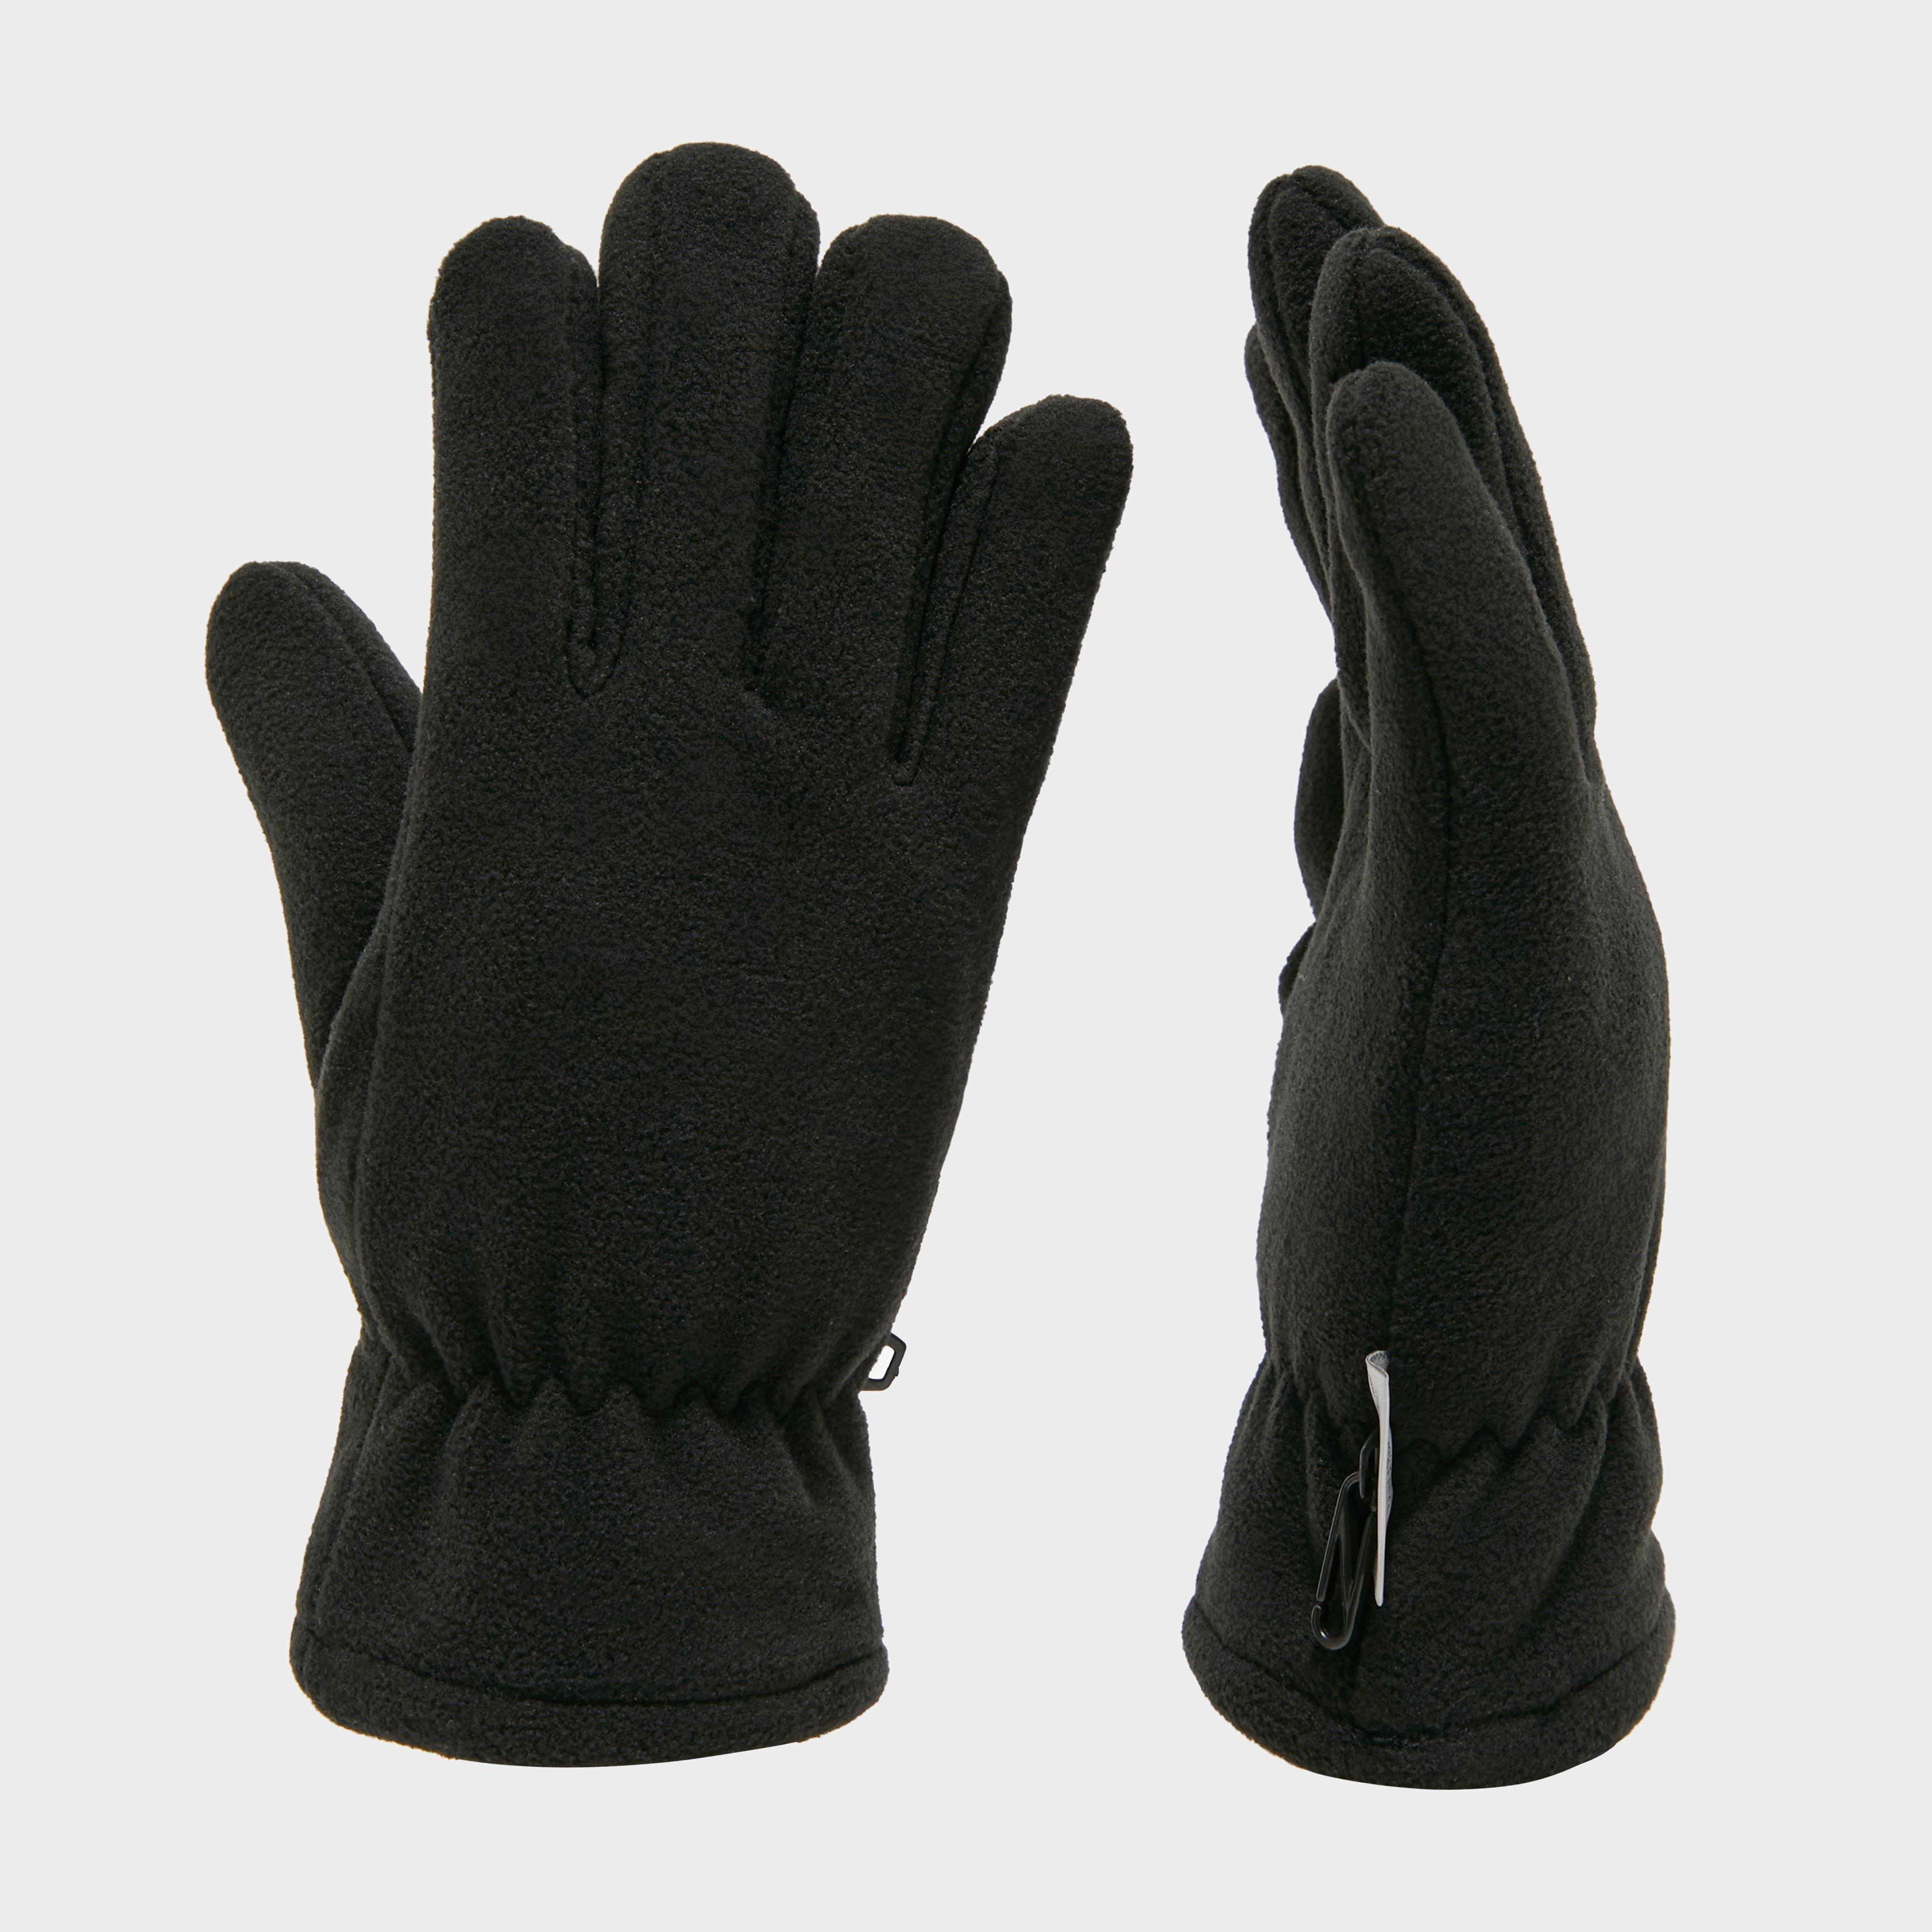 Peter Storm Thinsulate Double Fleece Gloves - Black/blk  Black/blk